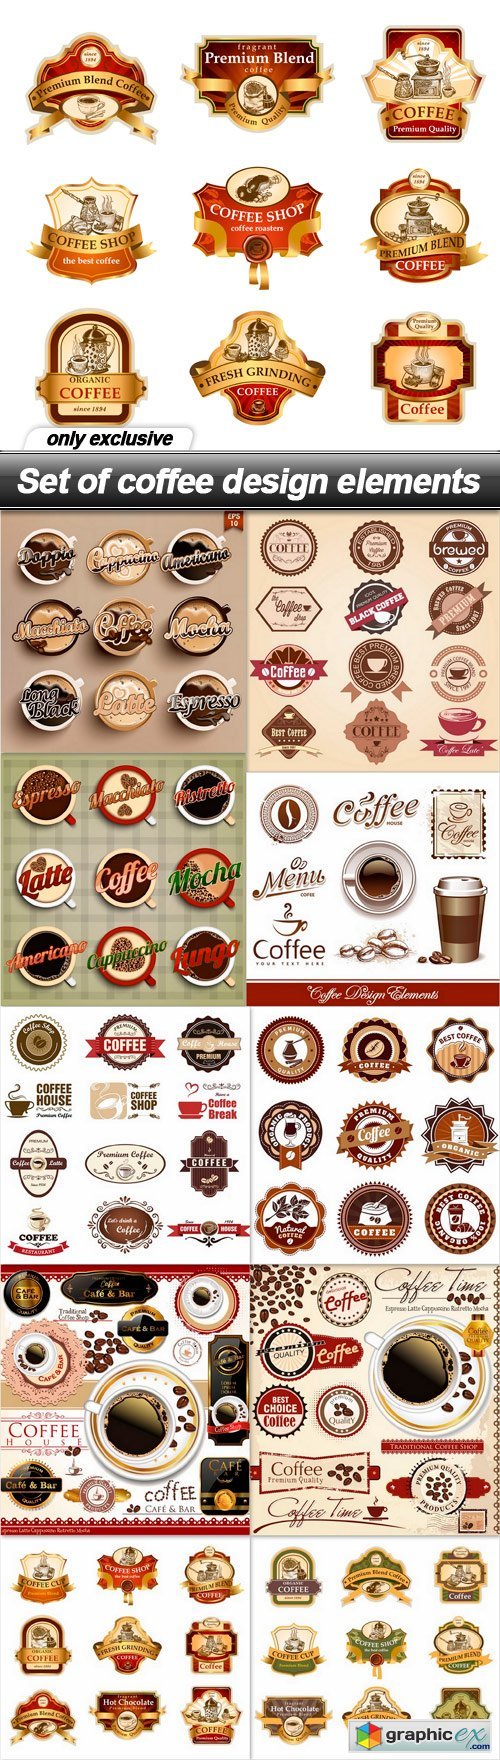 Set of coffee design elements - 11 EPS